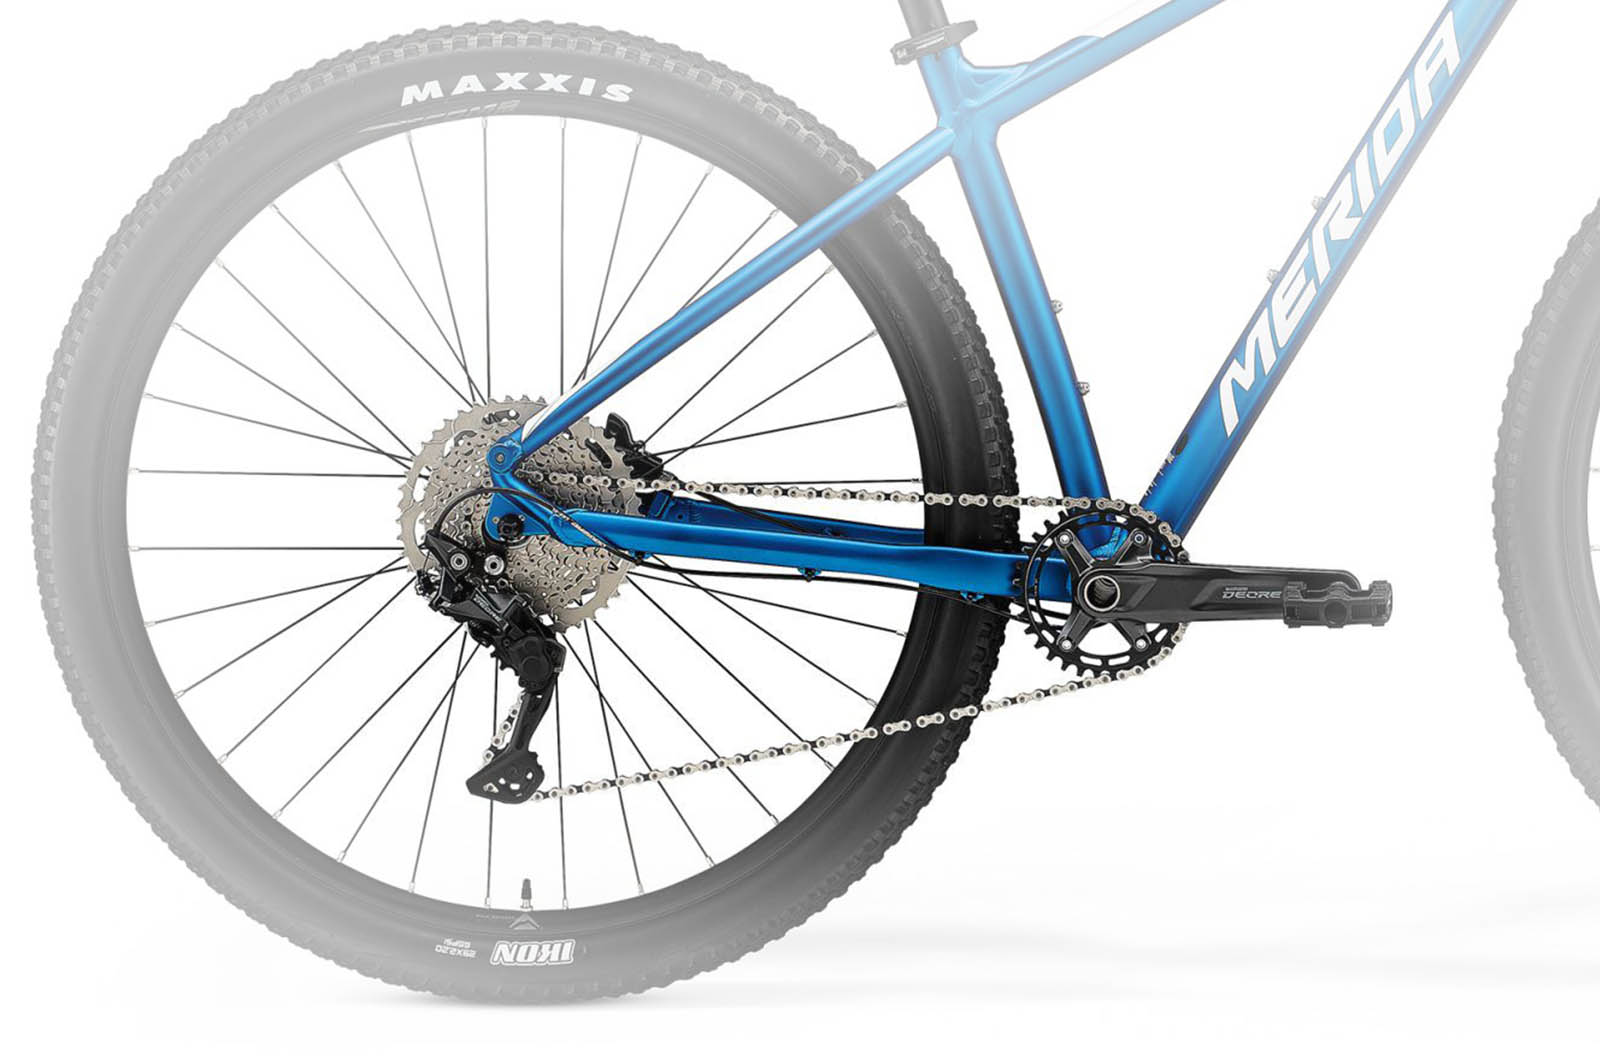 Nieuwe mountainbike voor 1000 euro: waar moet ik op - MTBblog.nl